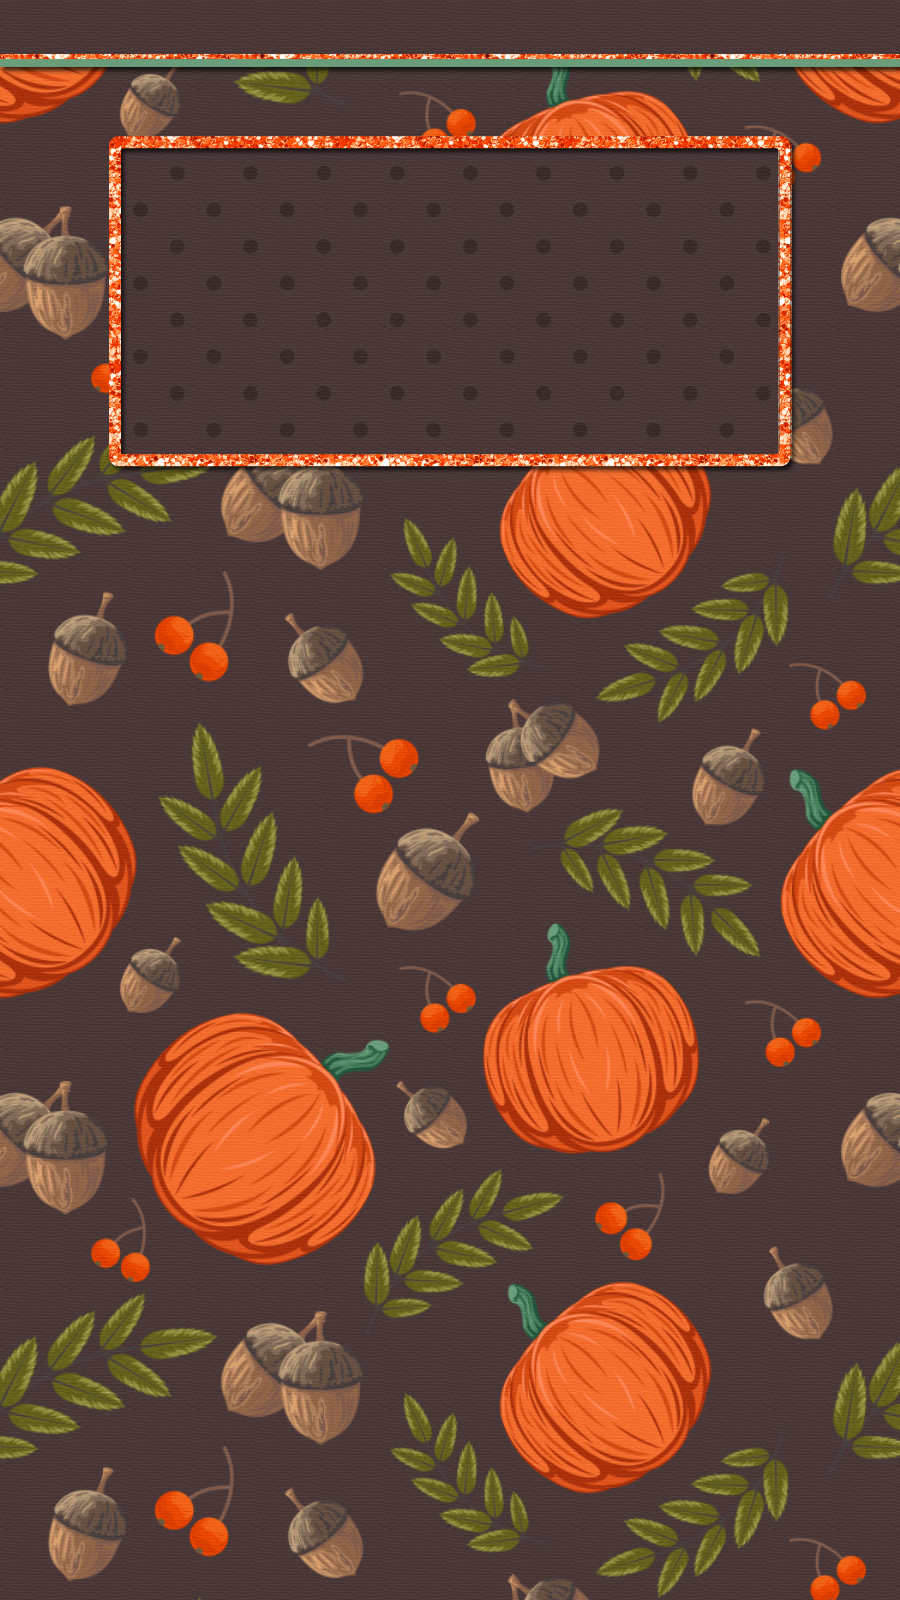 ♡ Cute Walls ♡: Autumn pumpkin wallpaper